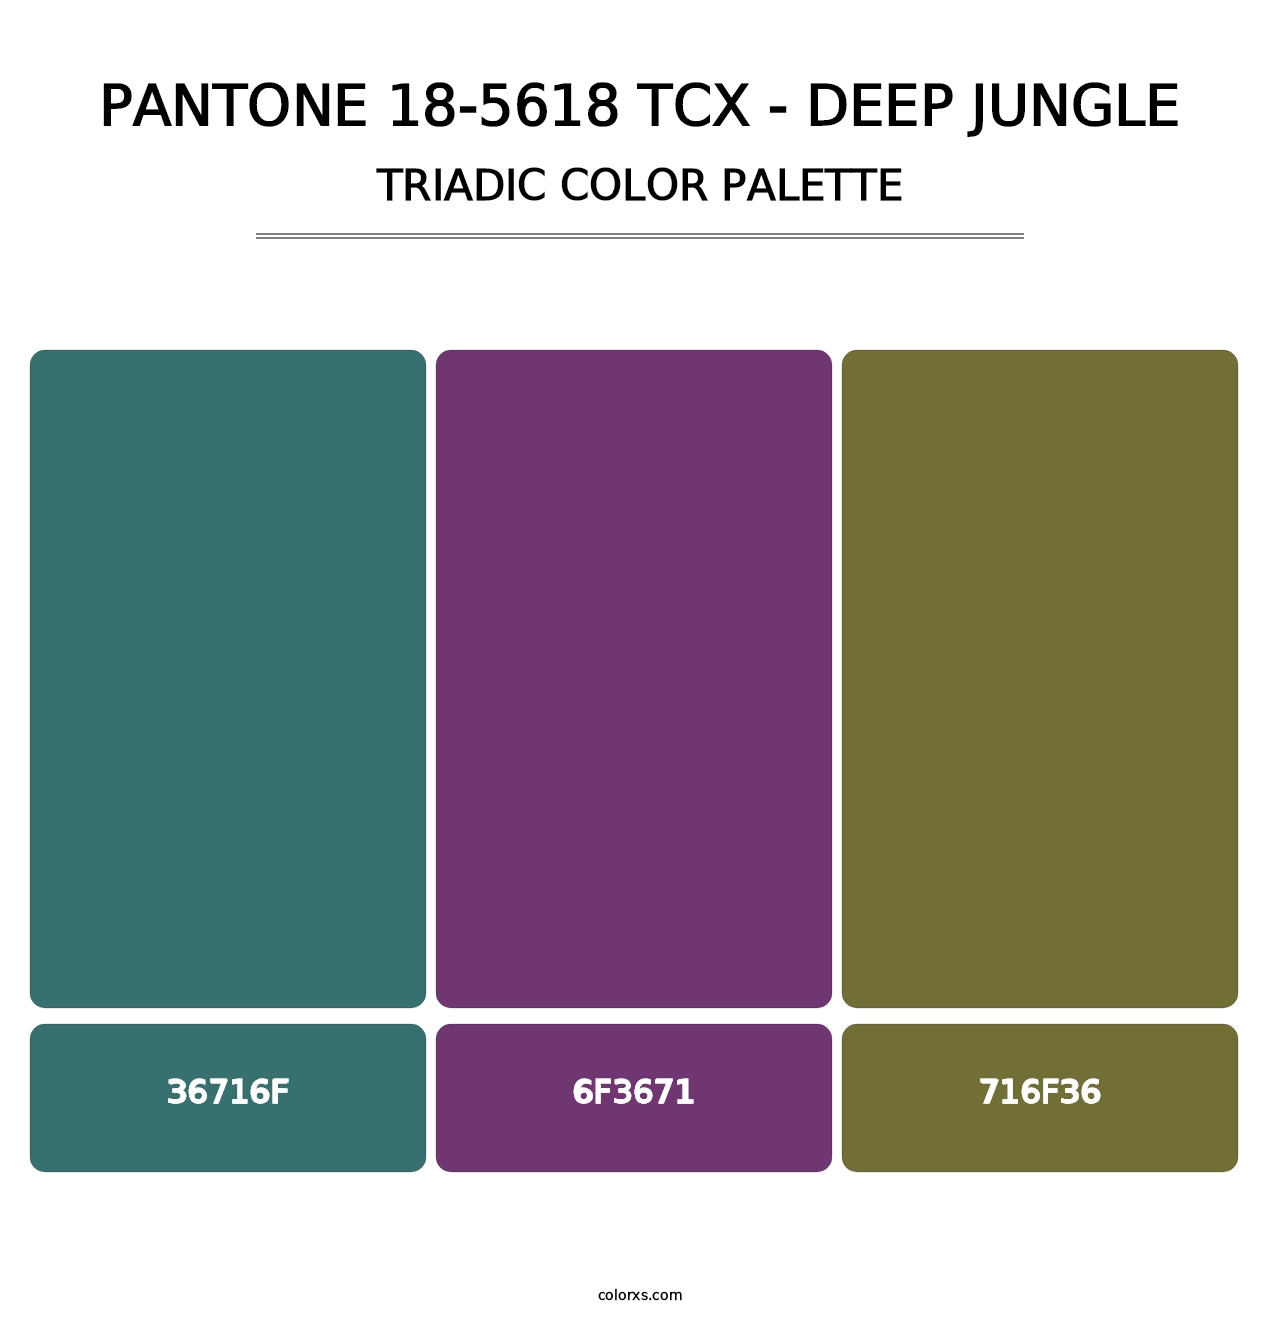 PANTONE 18-5618 TCX - Deep Jungle - Triadic Color Palette